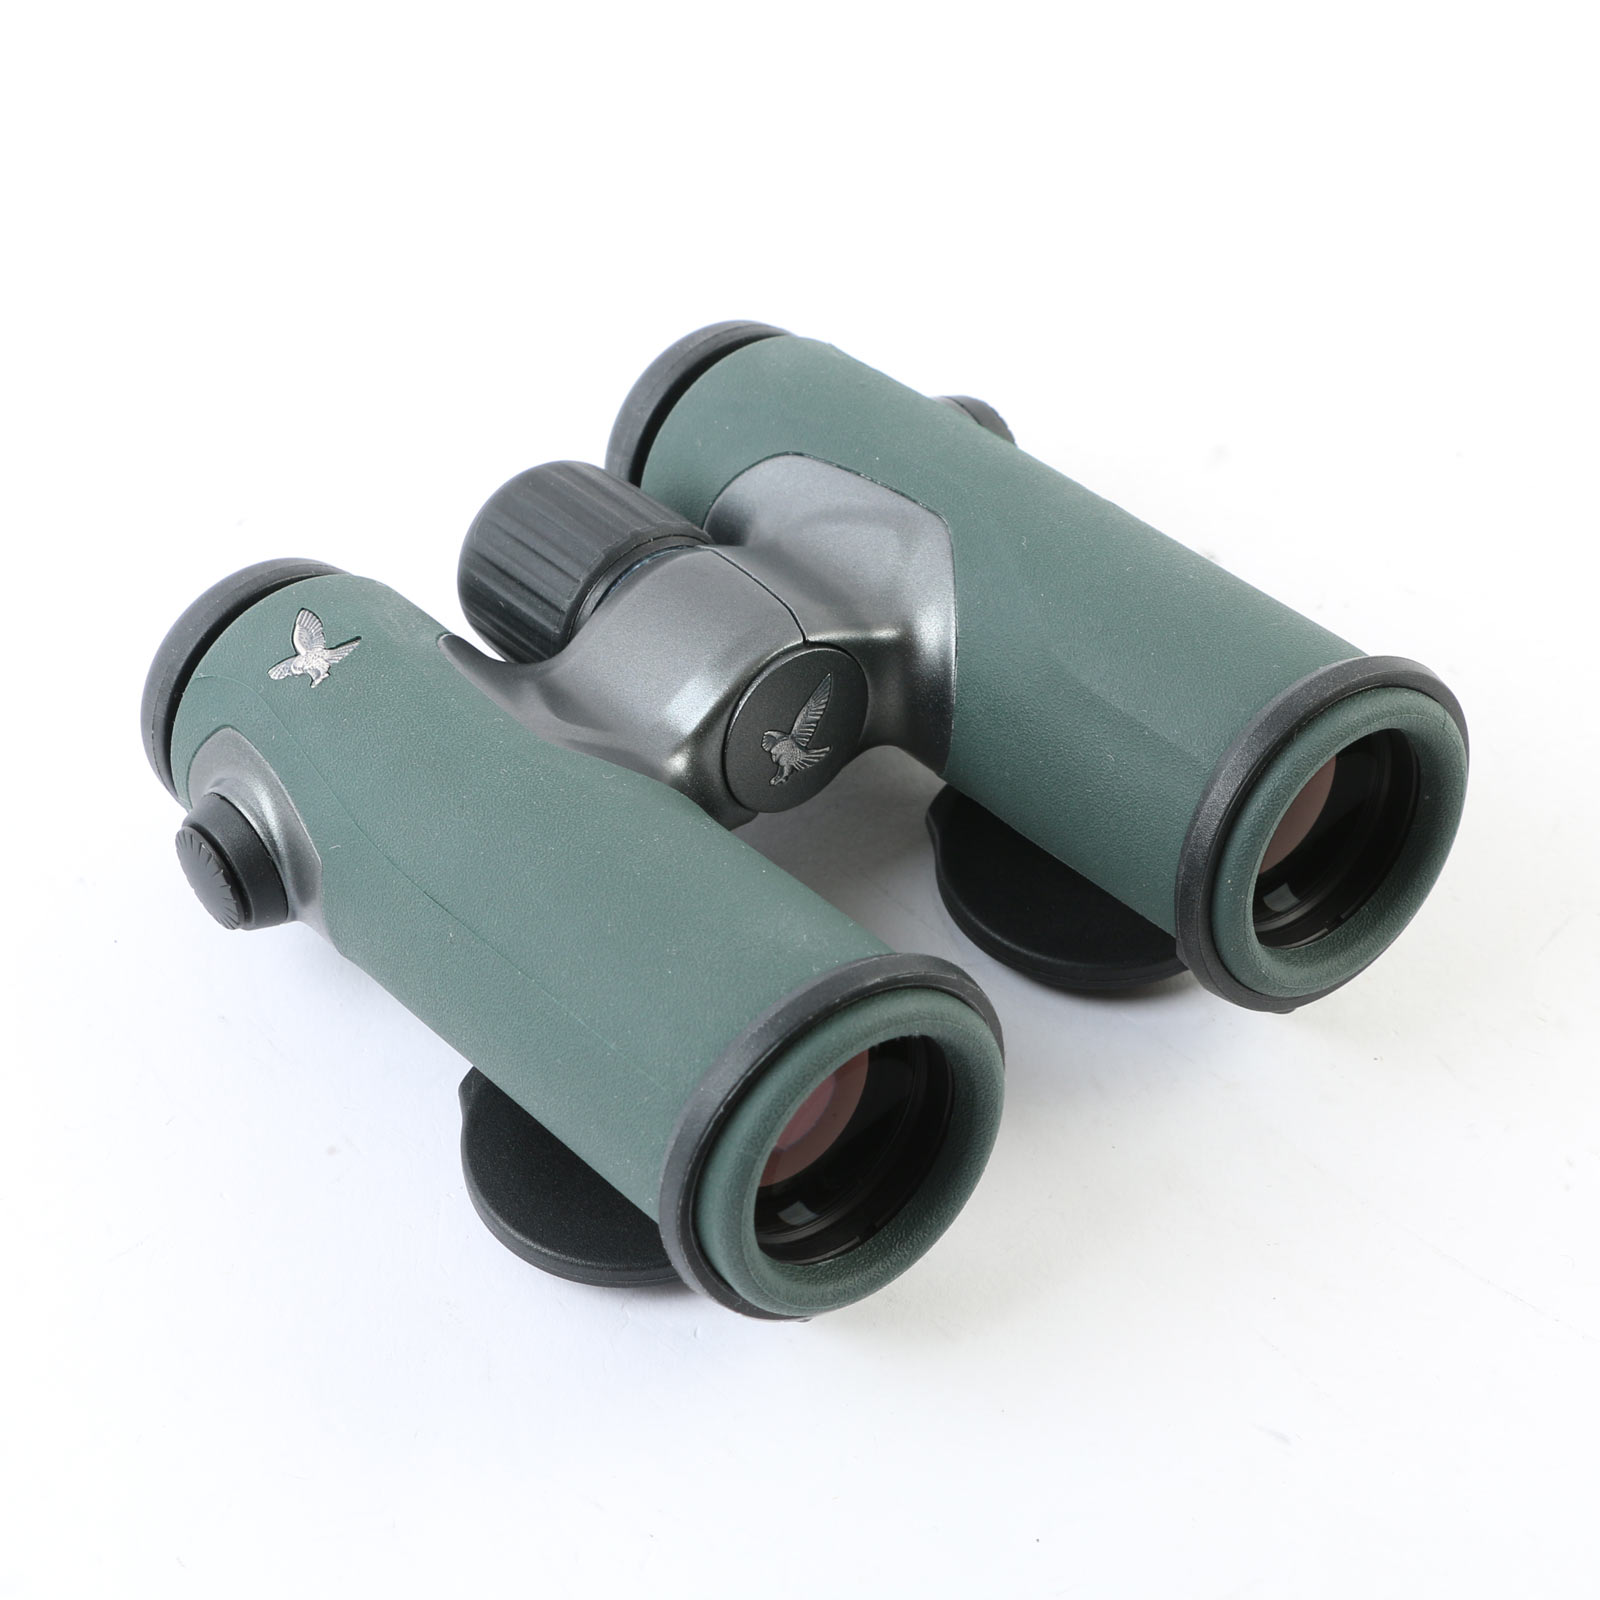 USED Swarovski CL Companion 8x30 Binoculars - Green - Northen Lights